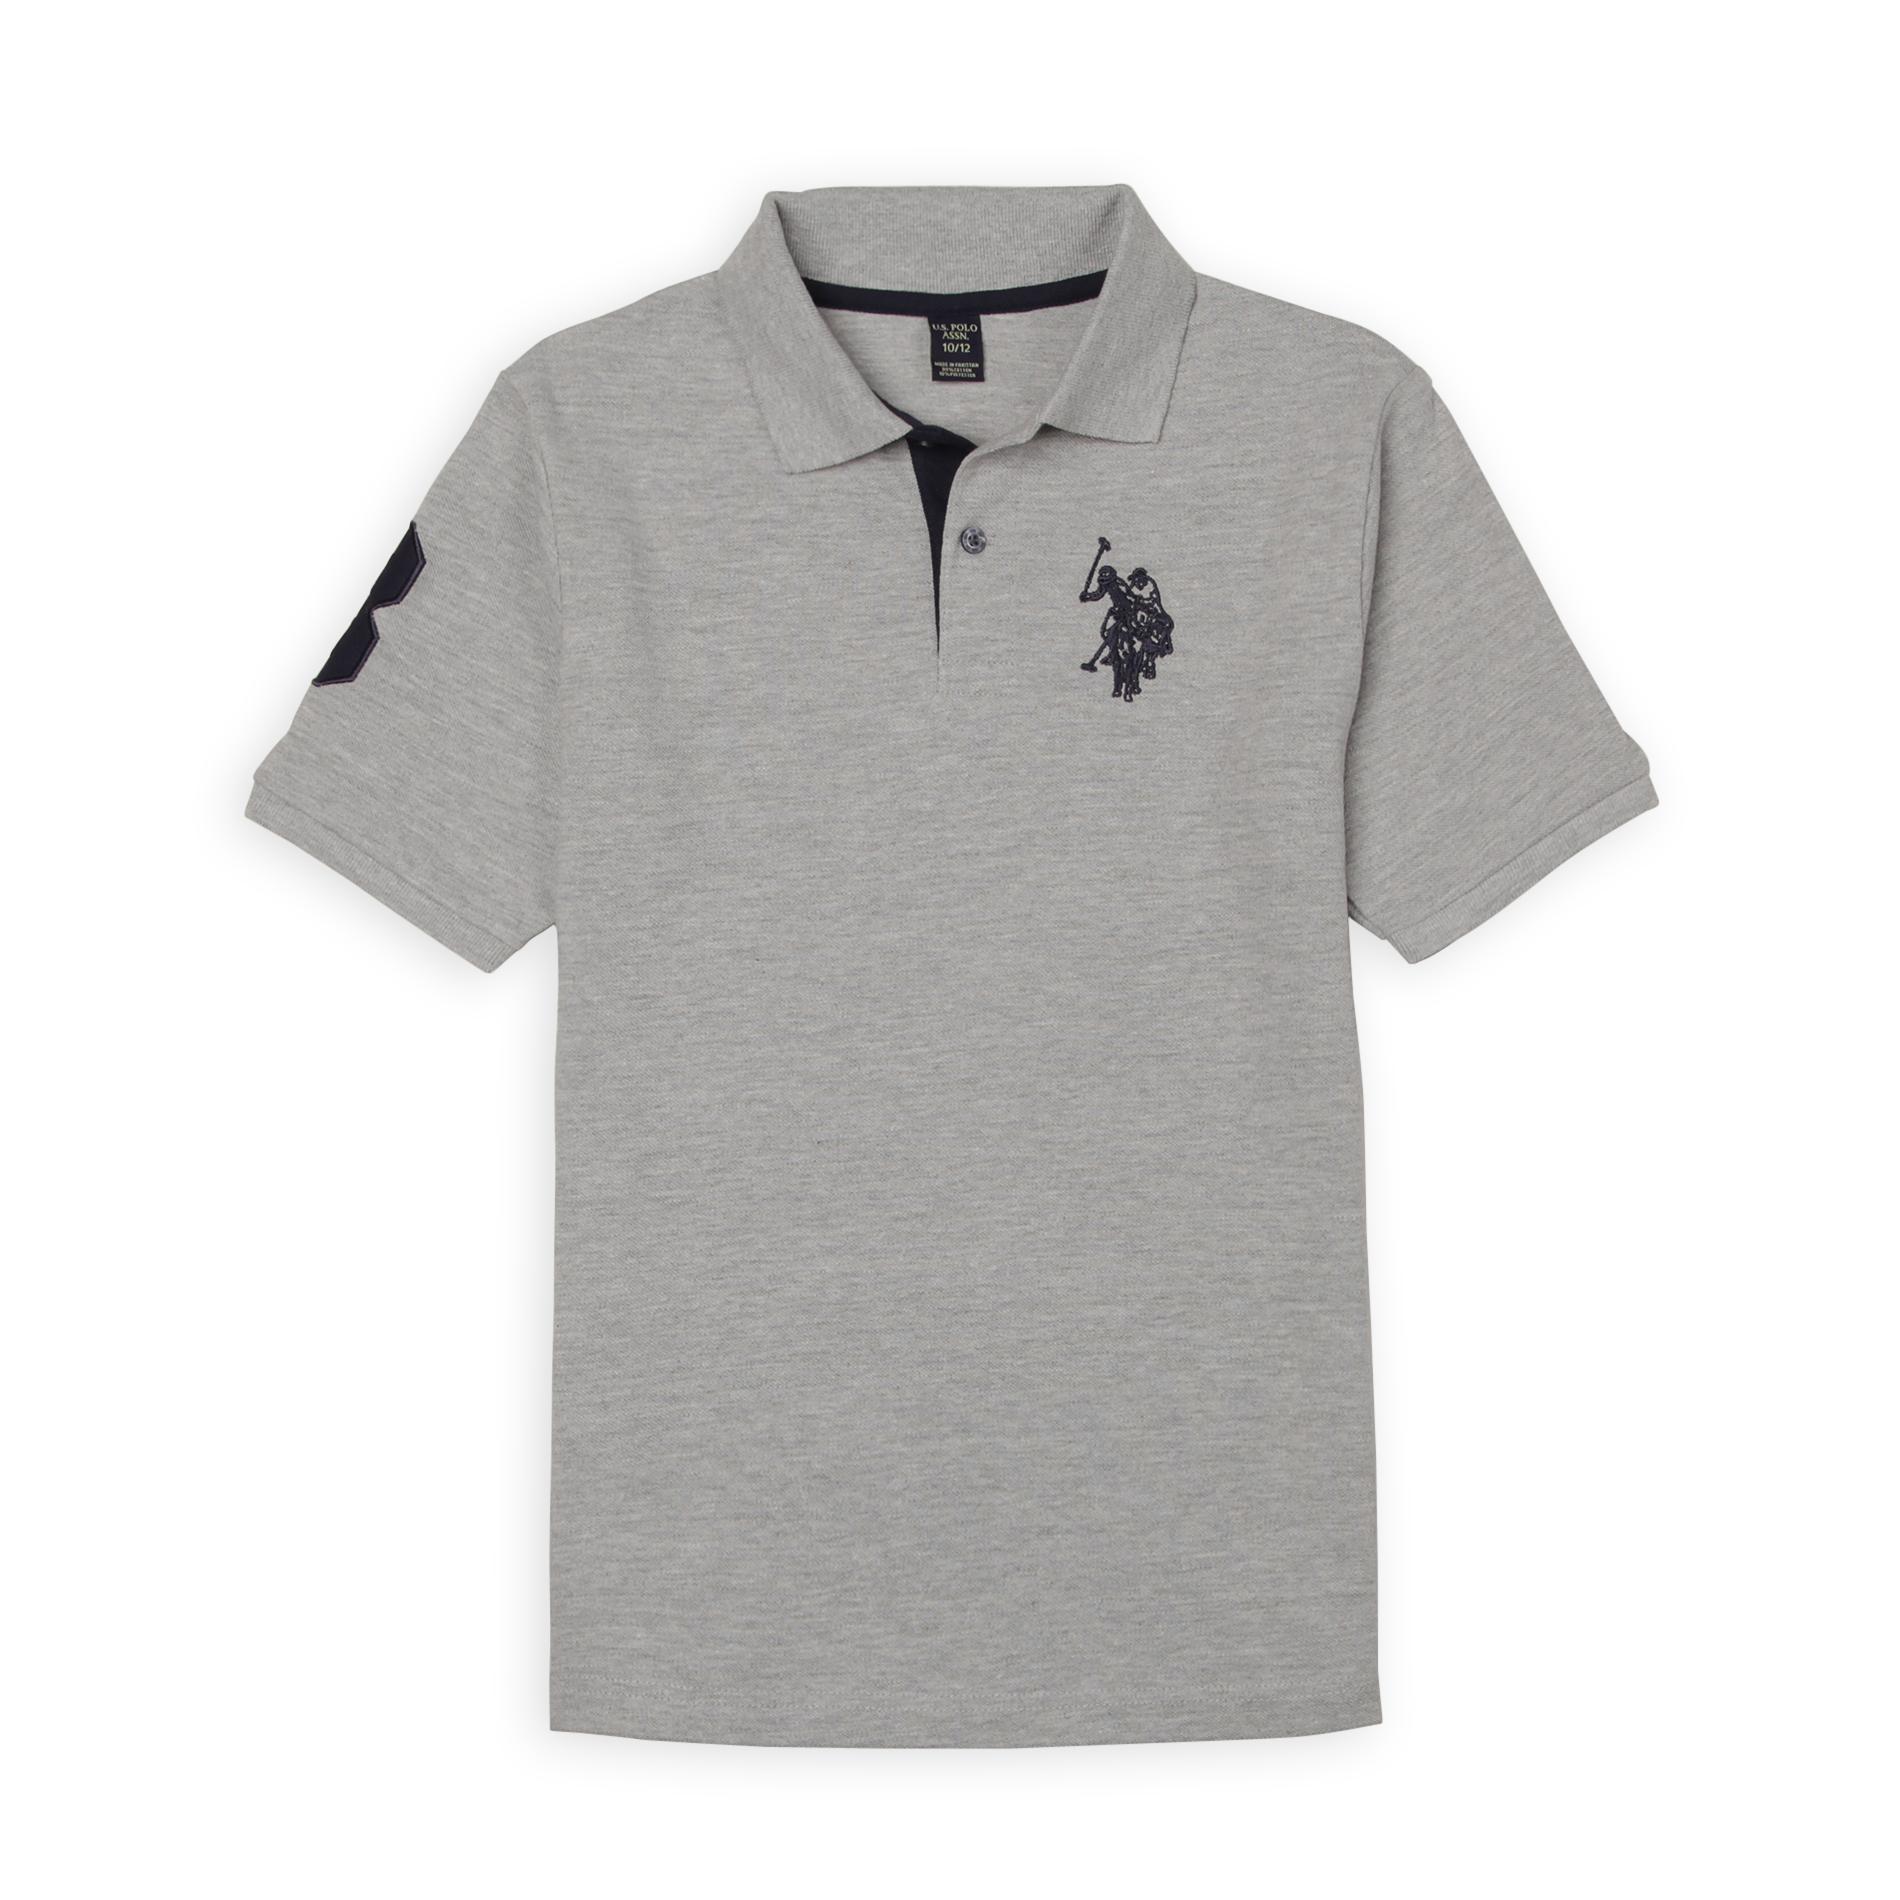 U.S. Polo Assn. Boy's Polo Shirt - Athletic Number